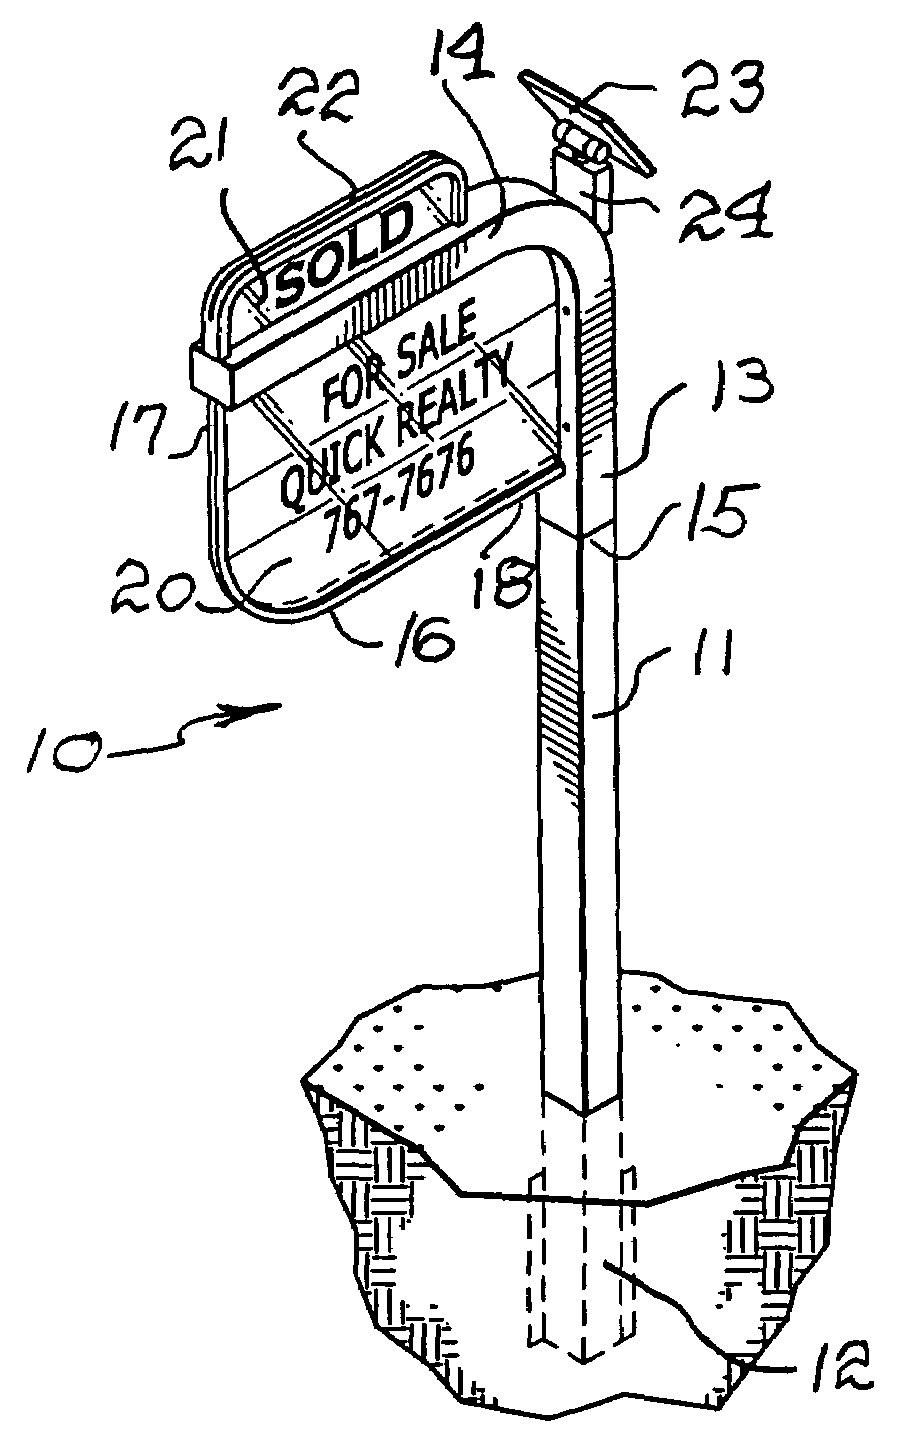 Display sign post